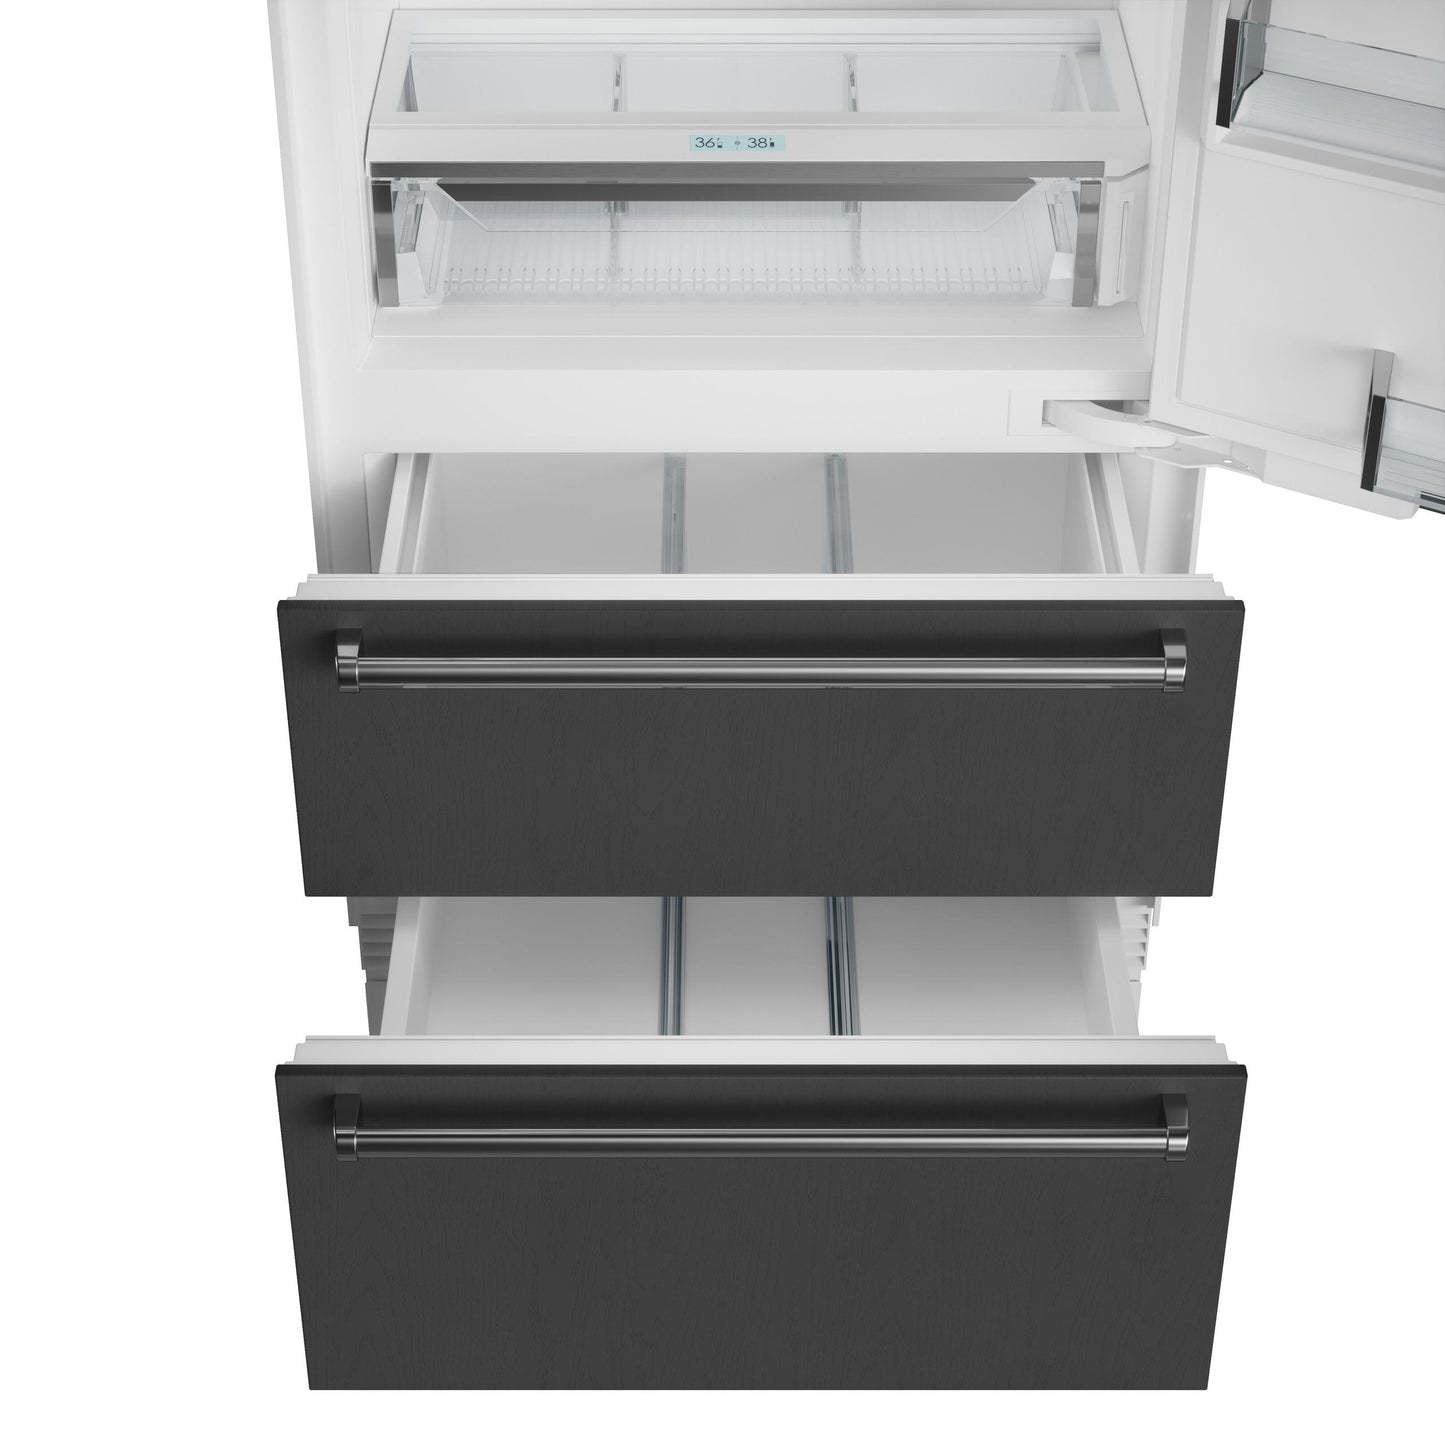 Sub-Zero DET3650RIDL 36" Designer Over-And-Under Refrigerator Internal Dispenser - Panel Ready